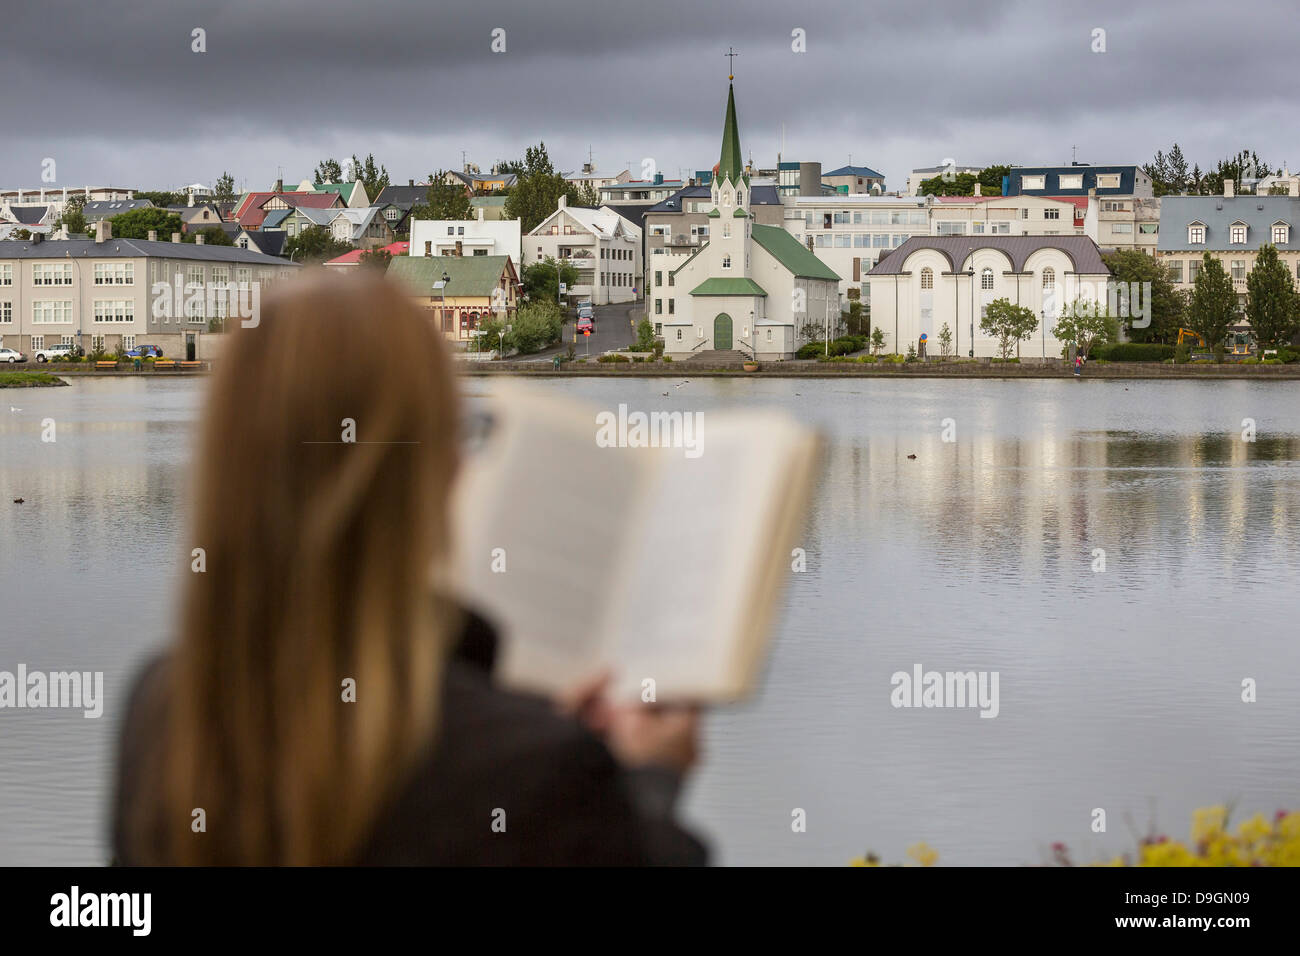 Woman reading next to statue of an Icelandic poet, Tomas Gudmundsson, Reykjavik, Iceland Stock Photo